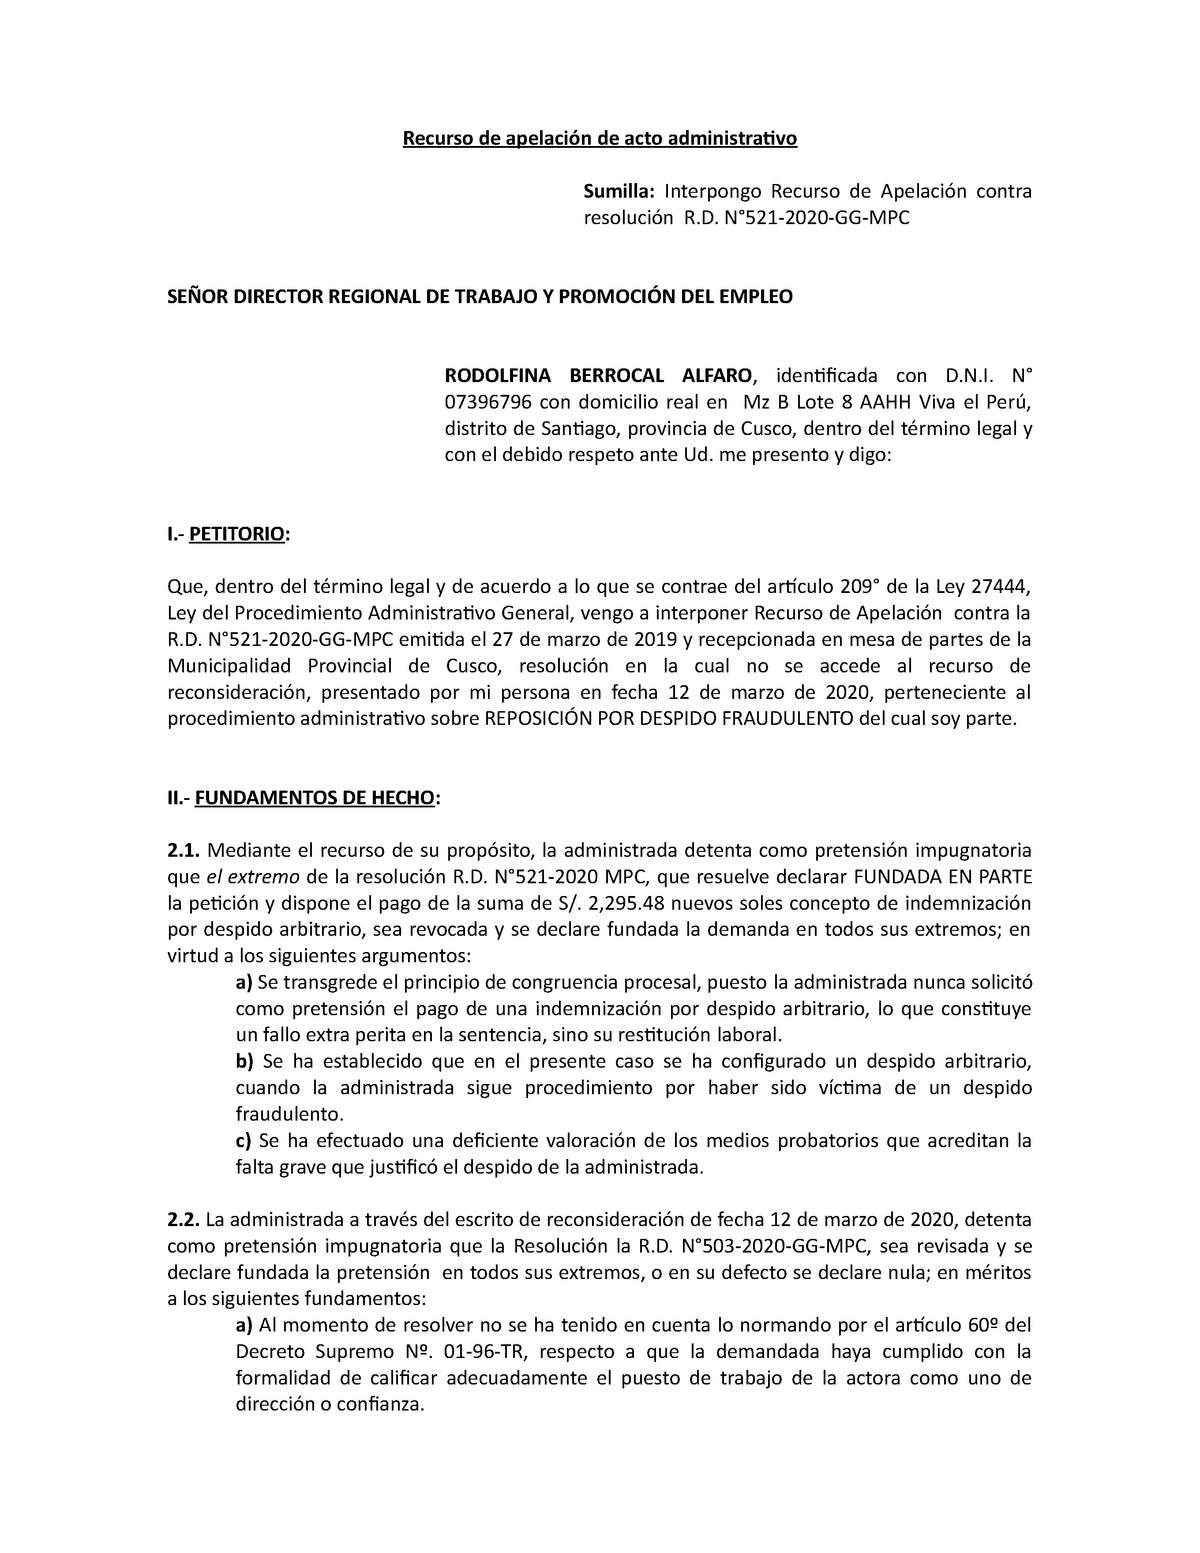 Apelación Administrativa - Recurso de apelación de acto administrativo  Sumilla: Interpongo Recurso - Studocu